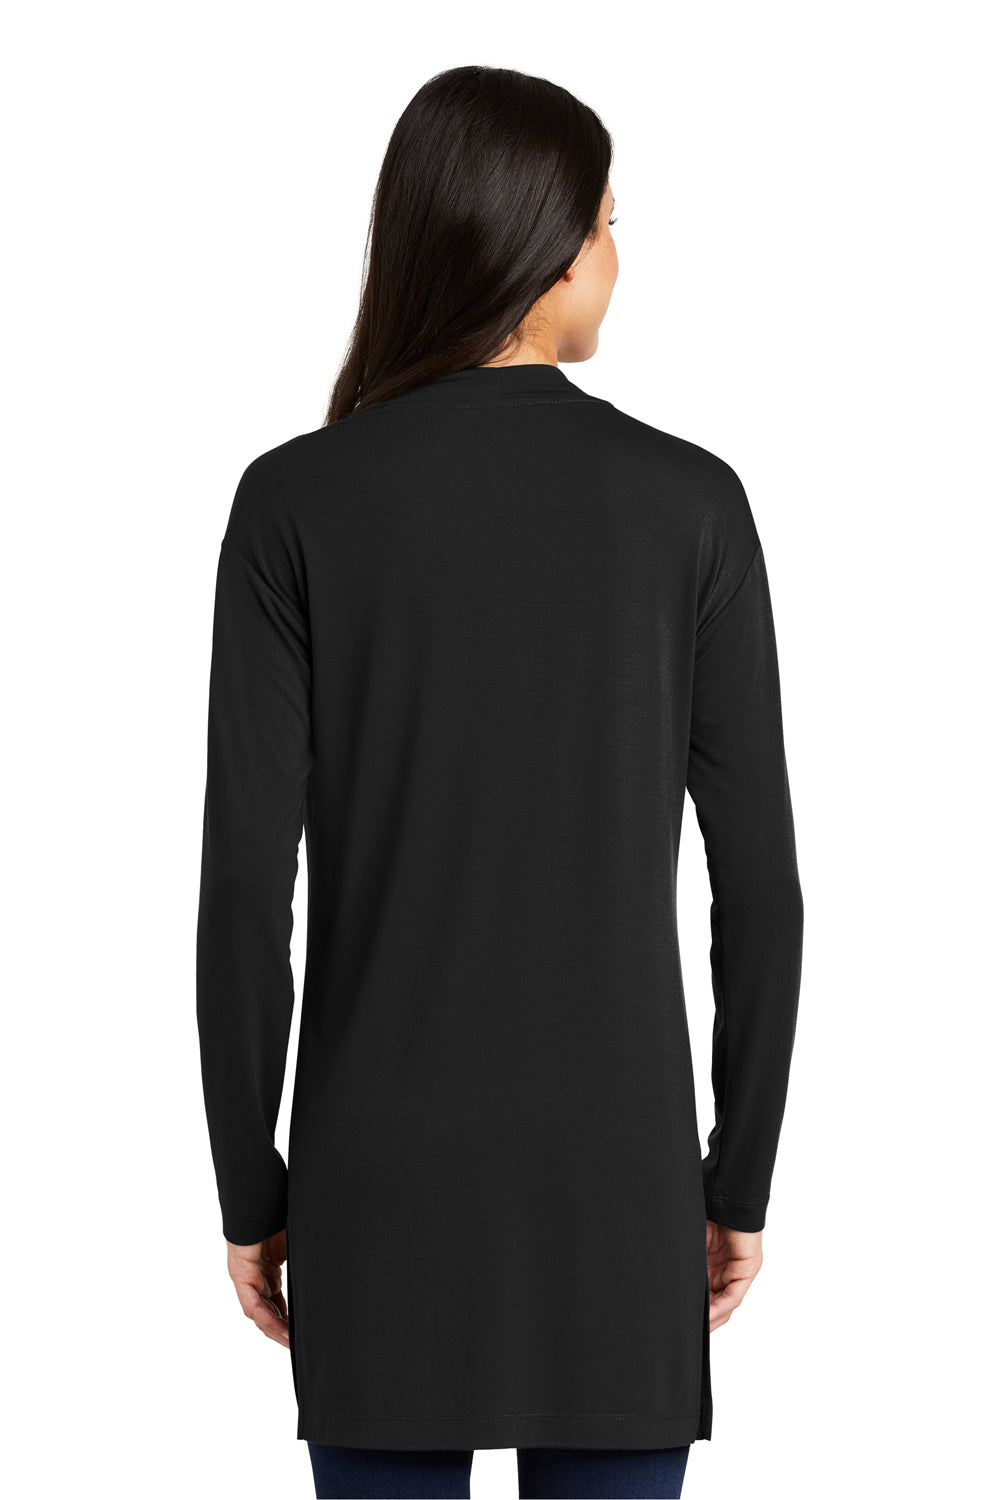 Port Authority LK5434 Womens Concept Long Sleeve Cardigan Sweater w/ Pockets Black Back